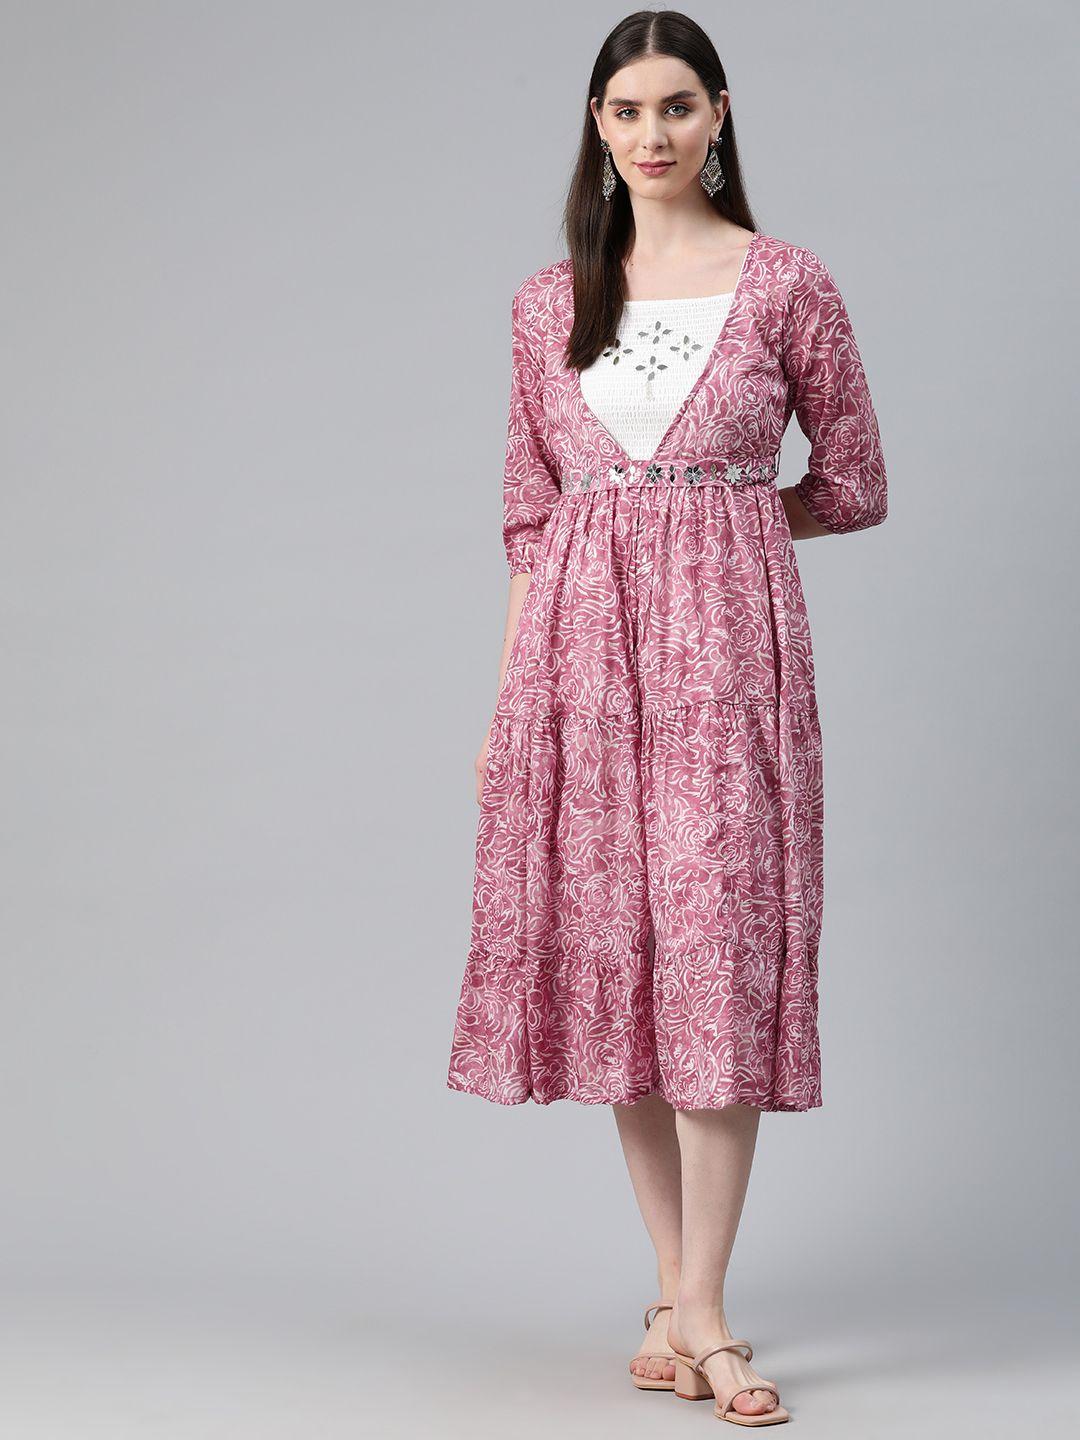 readiprint fashions embellished print fit & flare midi dress with shrug & belt